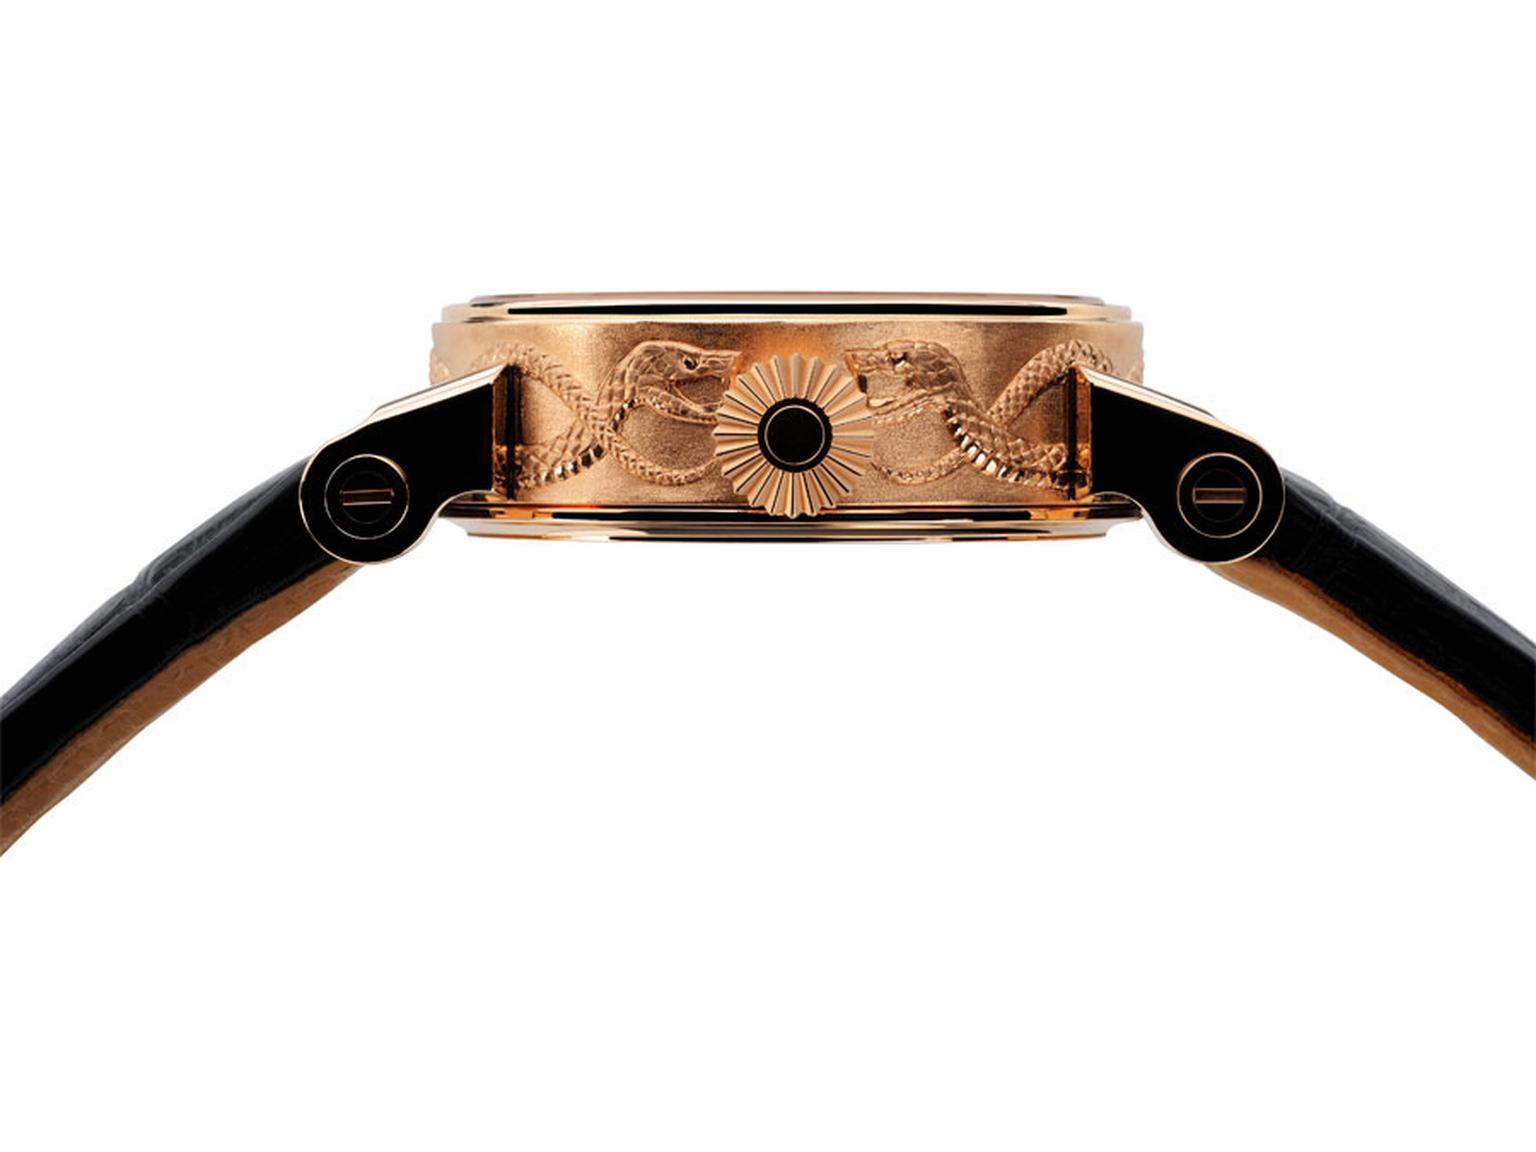 Speake-Marin-Art-Series-watch-with-engraved-snake-in-red-gold.jpg